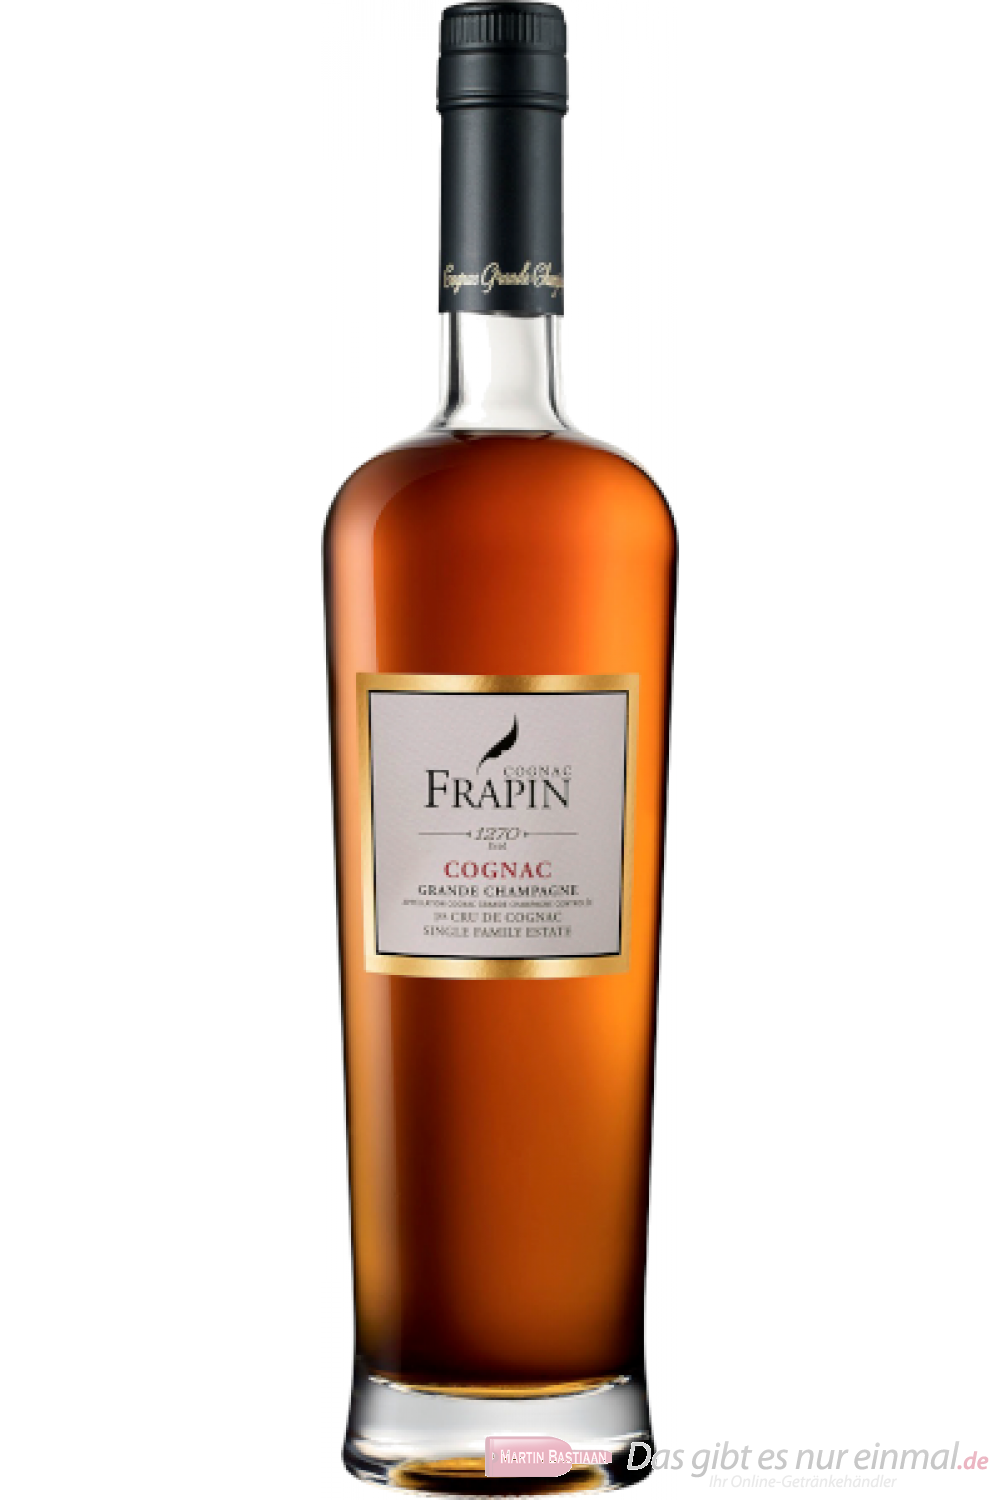 Frapin Cognac 1270 0,7l